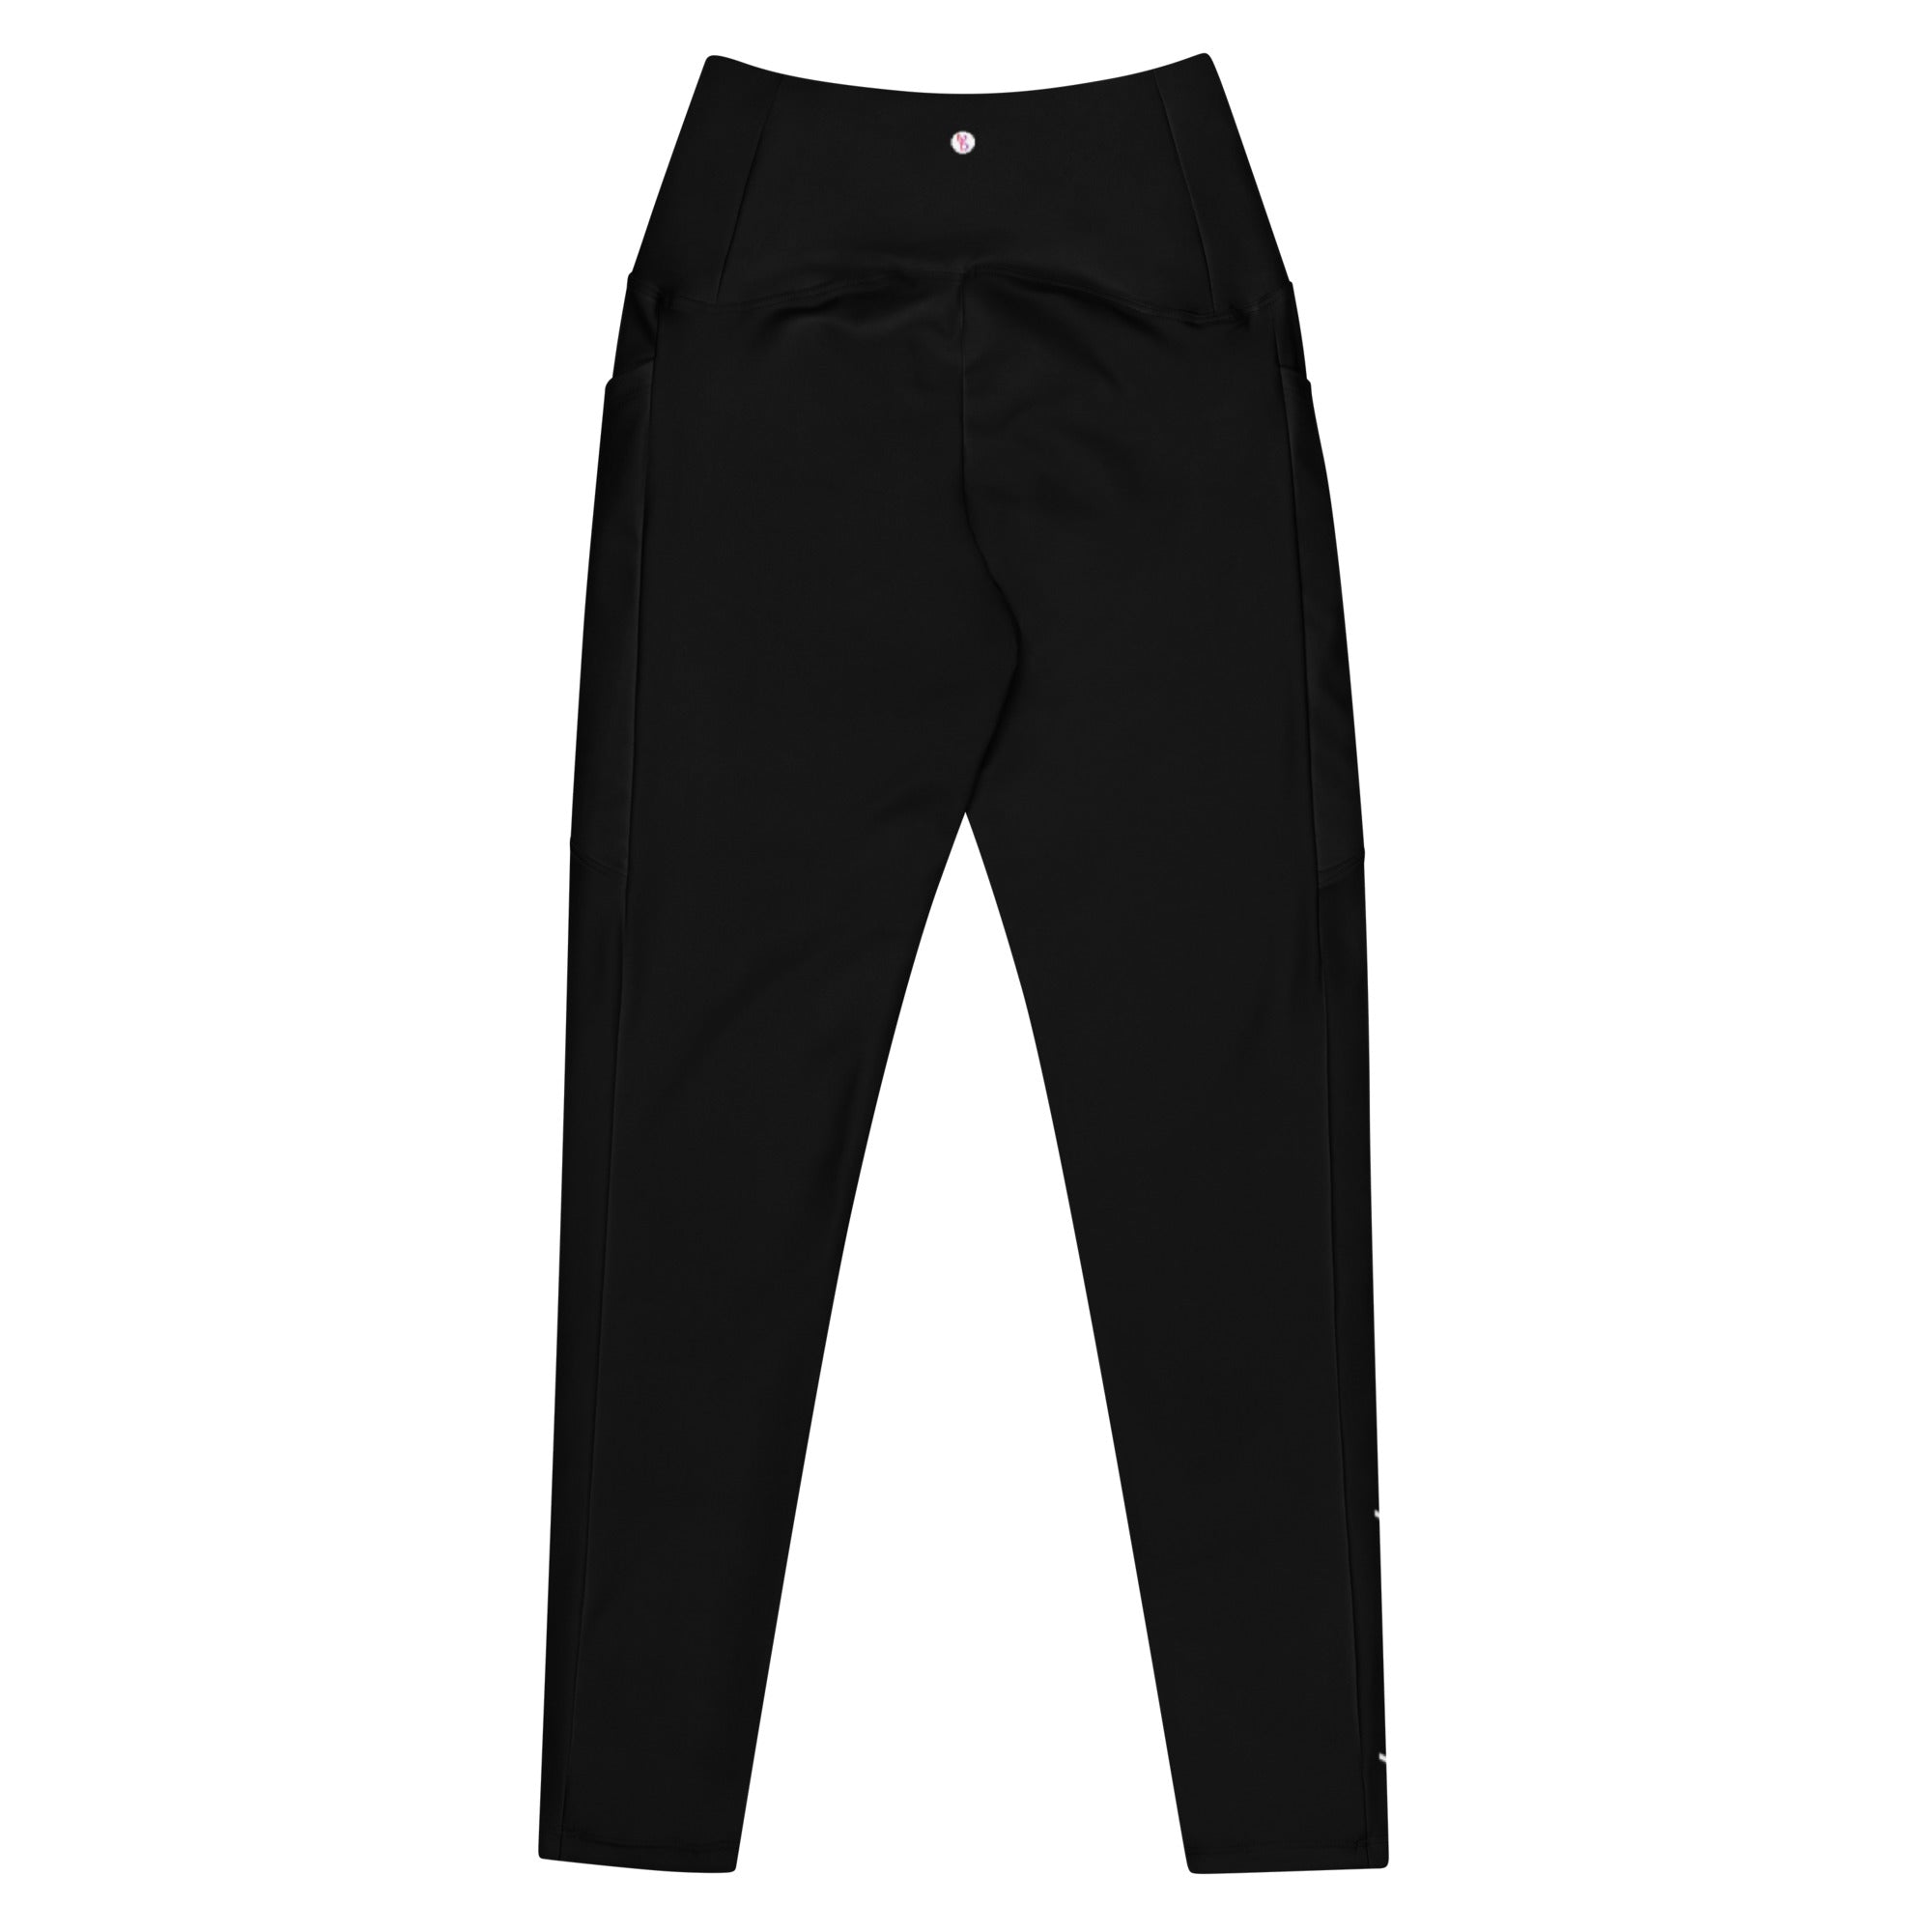 New Look faux leather trouser leggings in black | ASOS